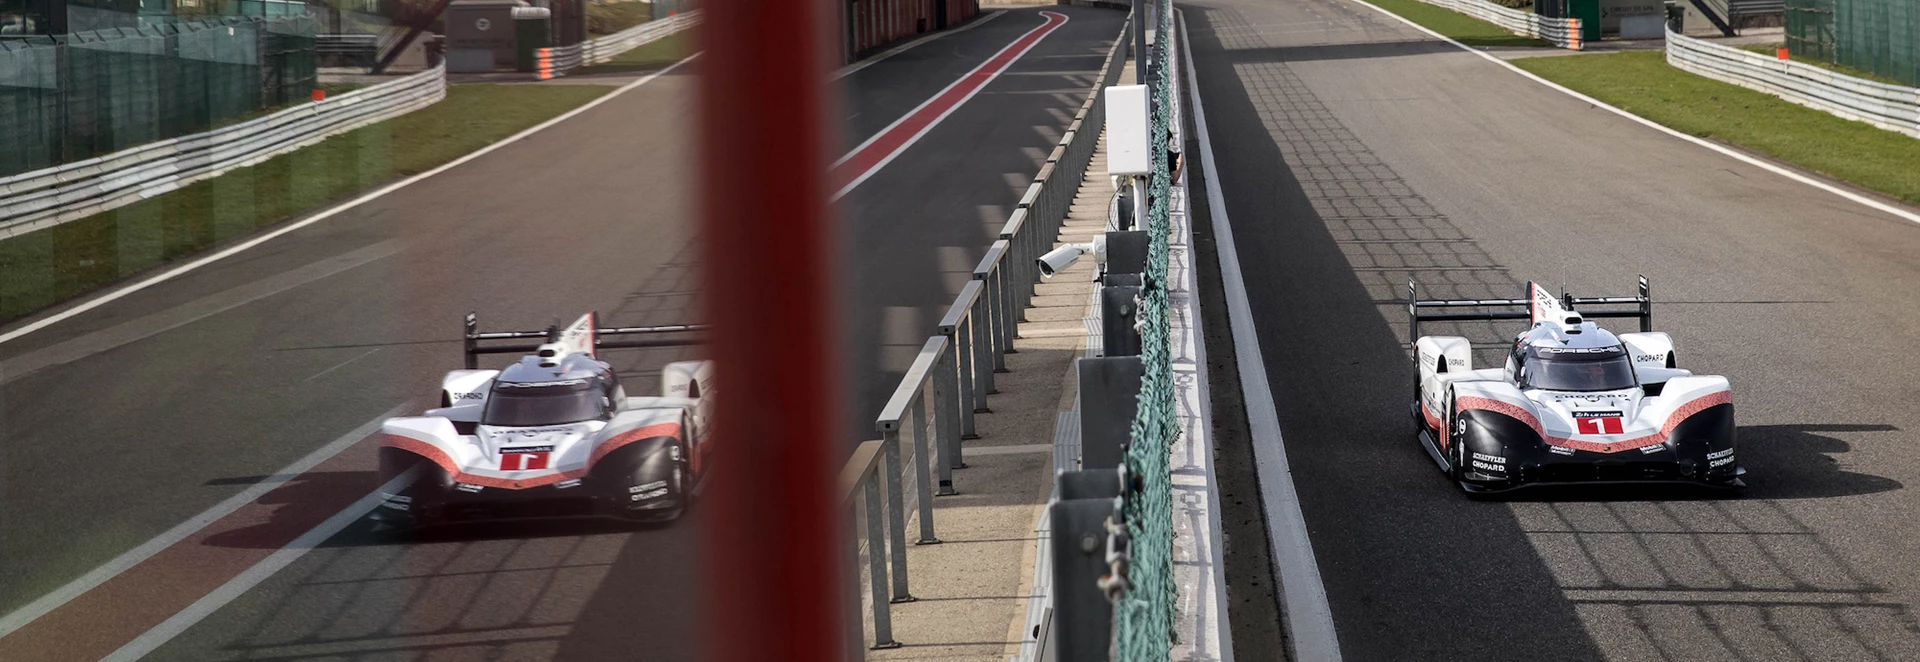 The Porsche 919 Hybrid Evo racer is faster than a Formula One car 